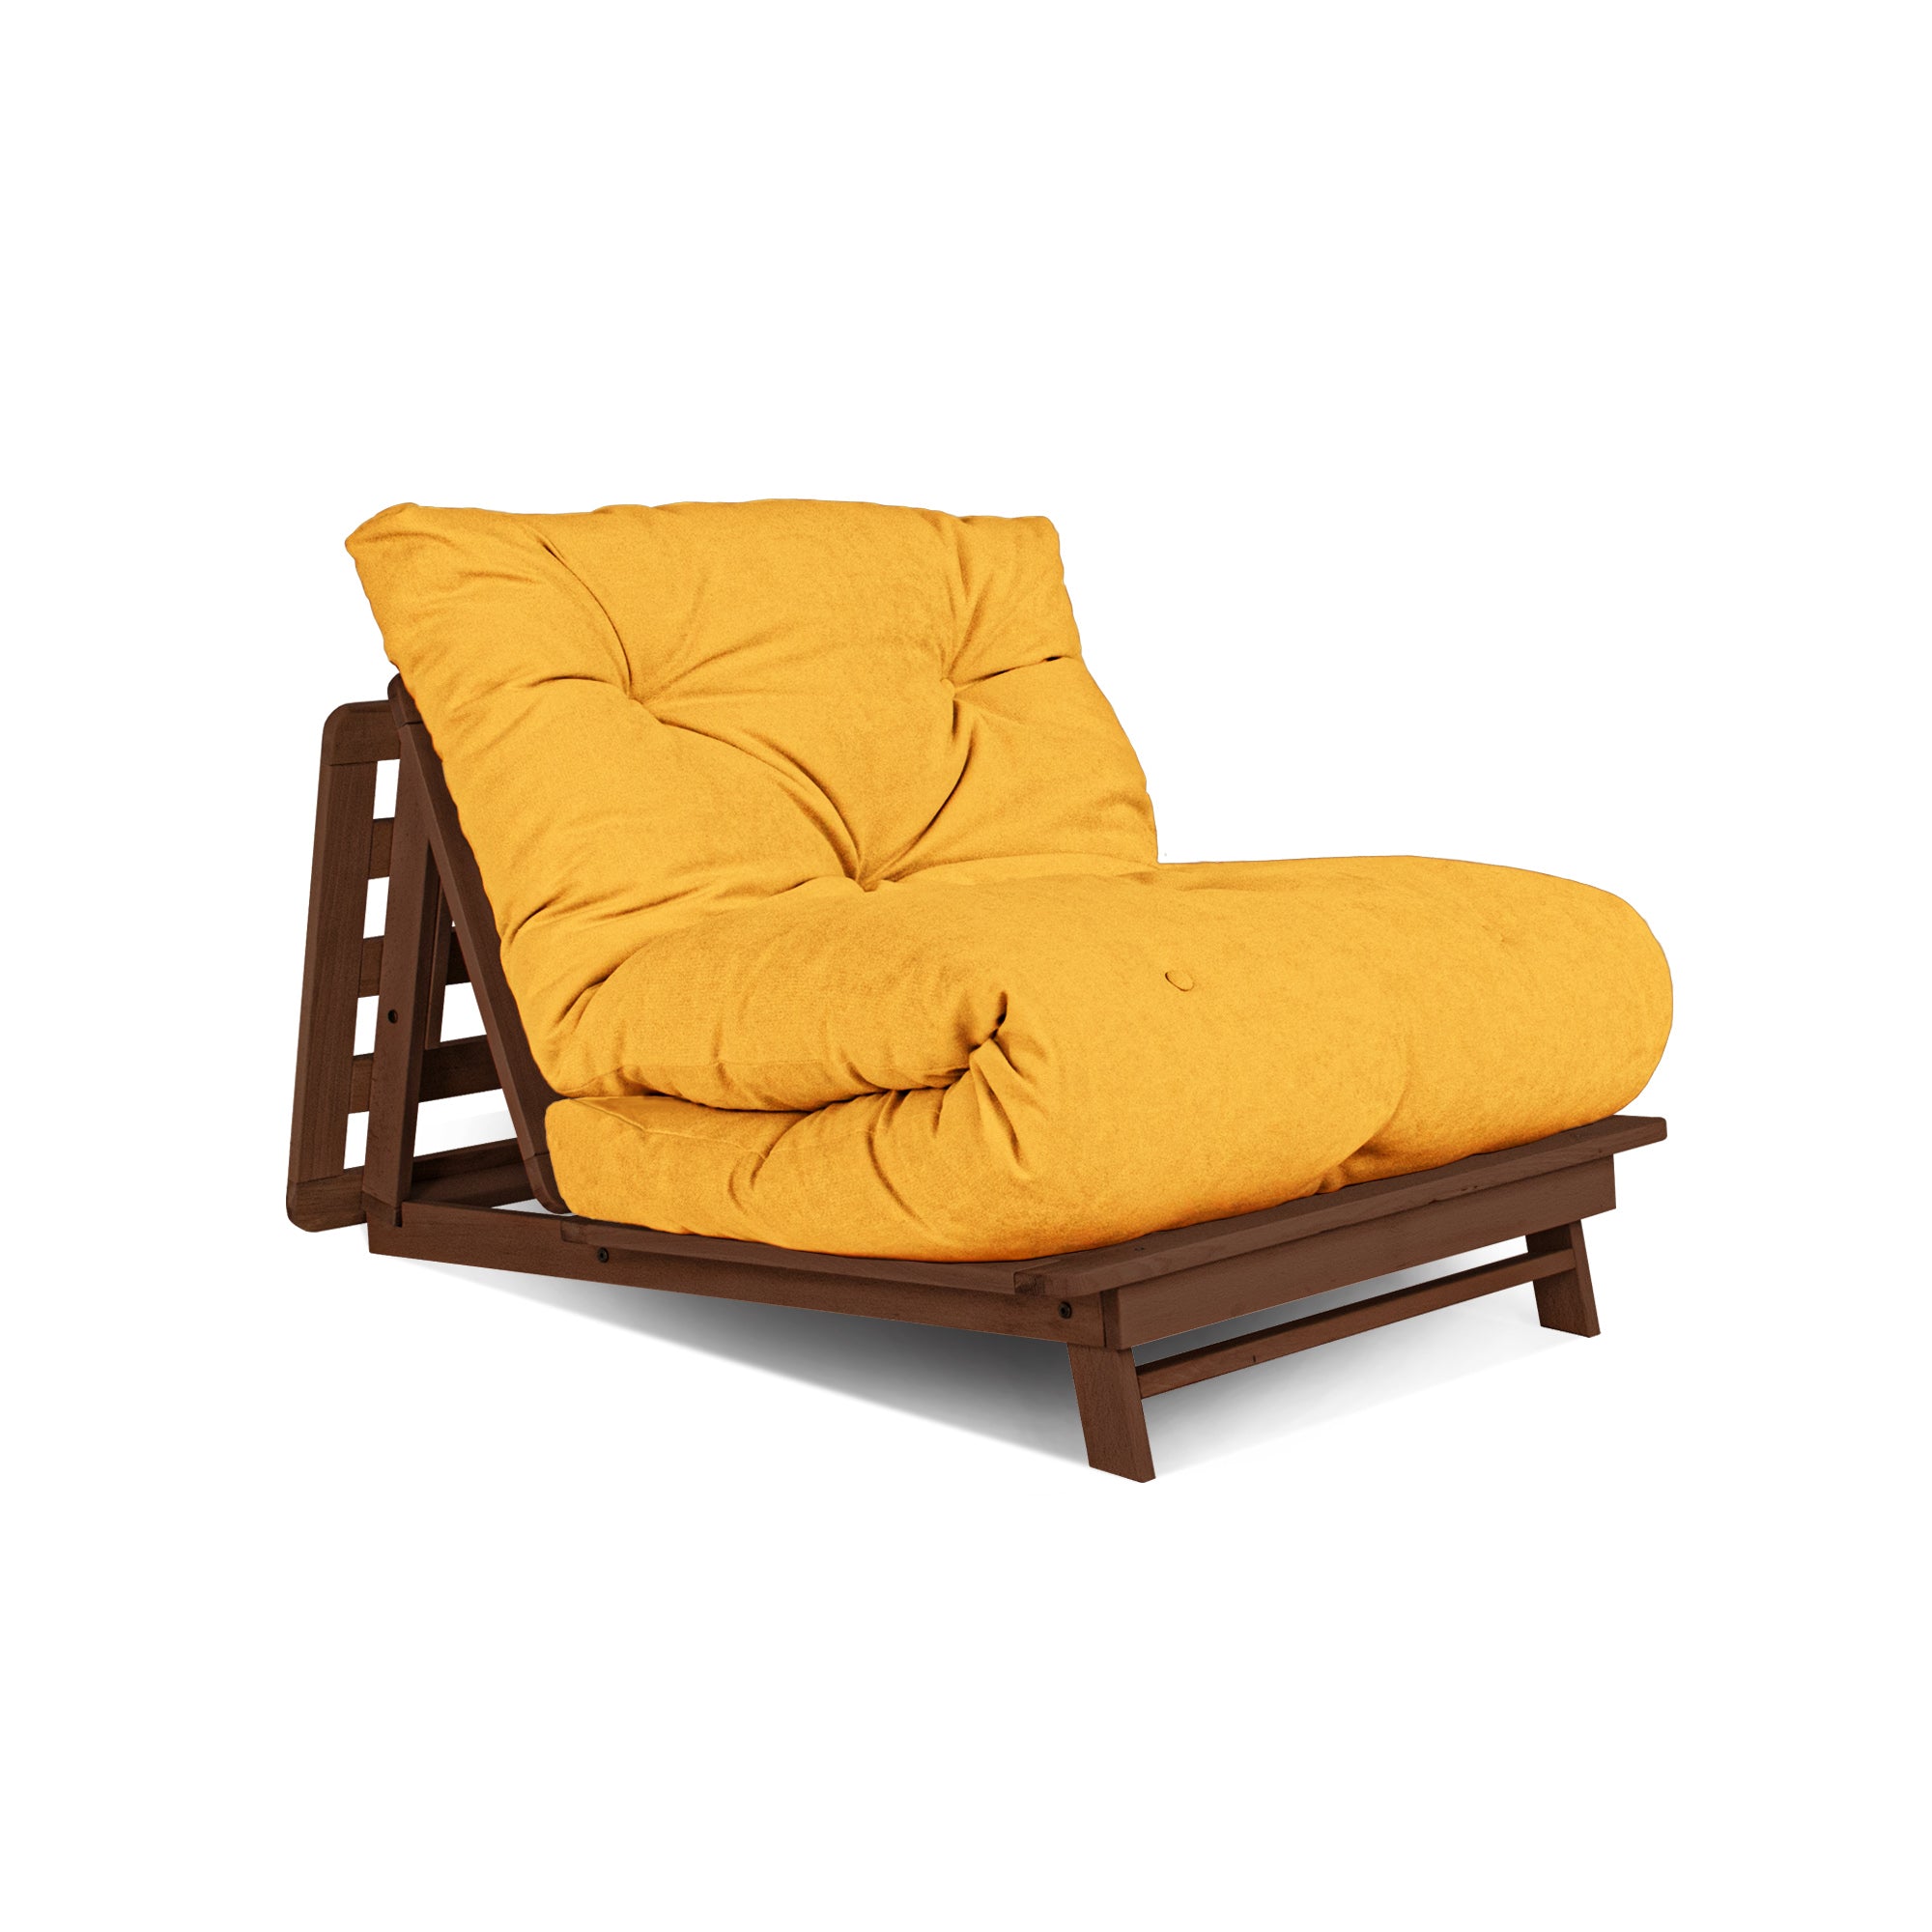 LAYTI-90 Futon Chair-walnut frame-yellow fabric